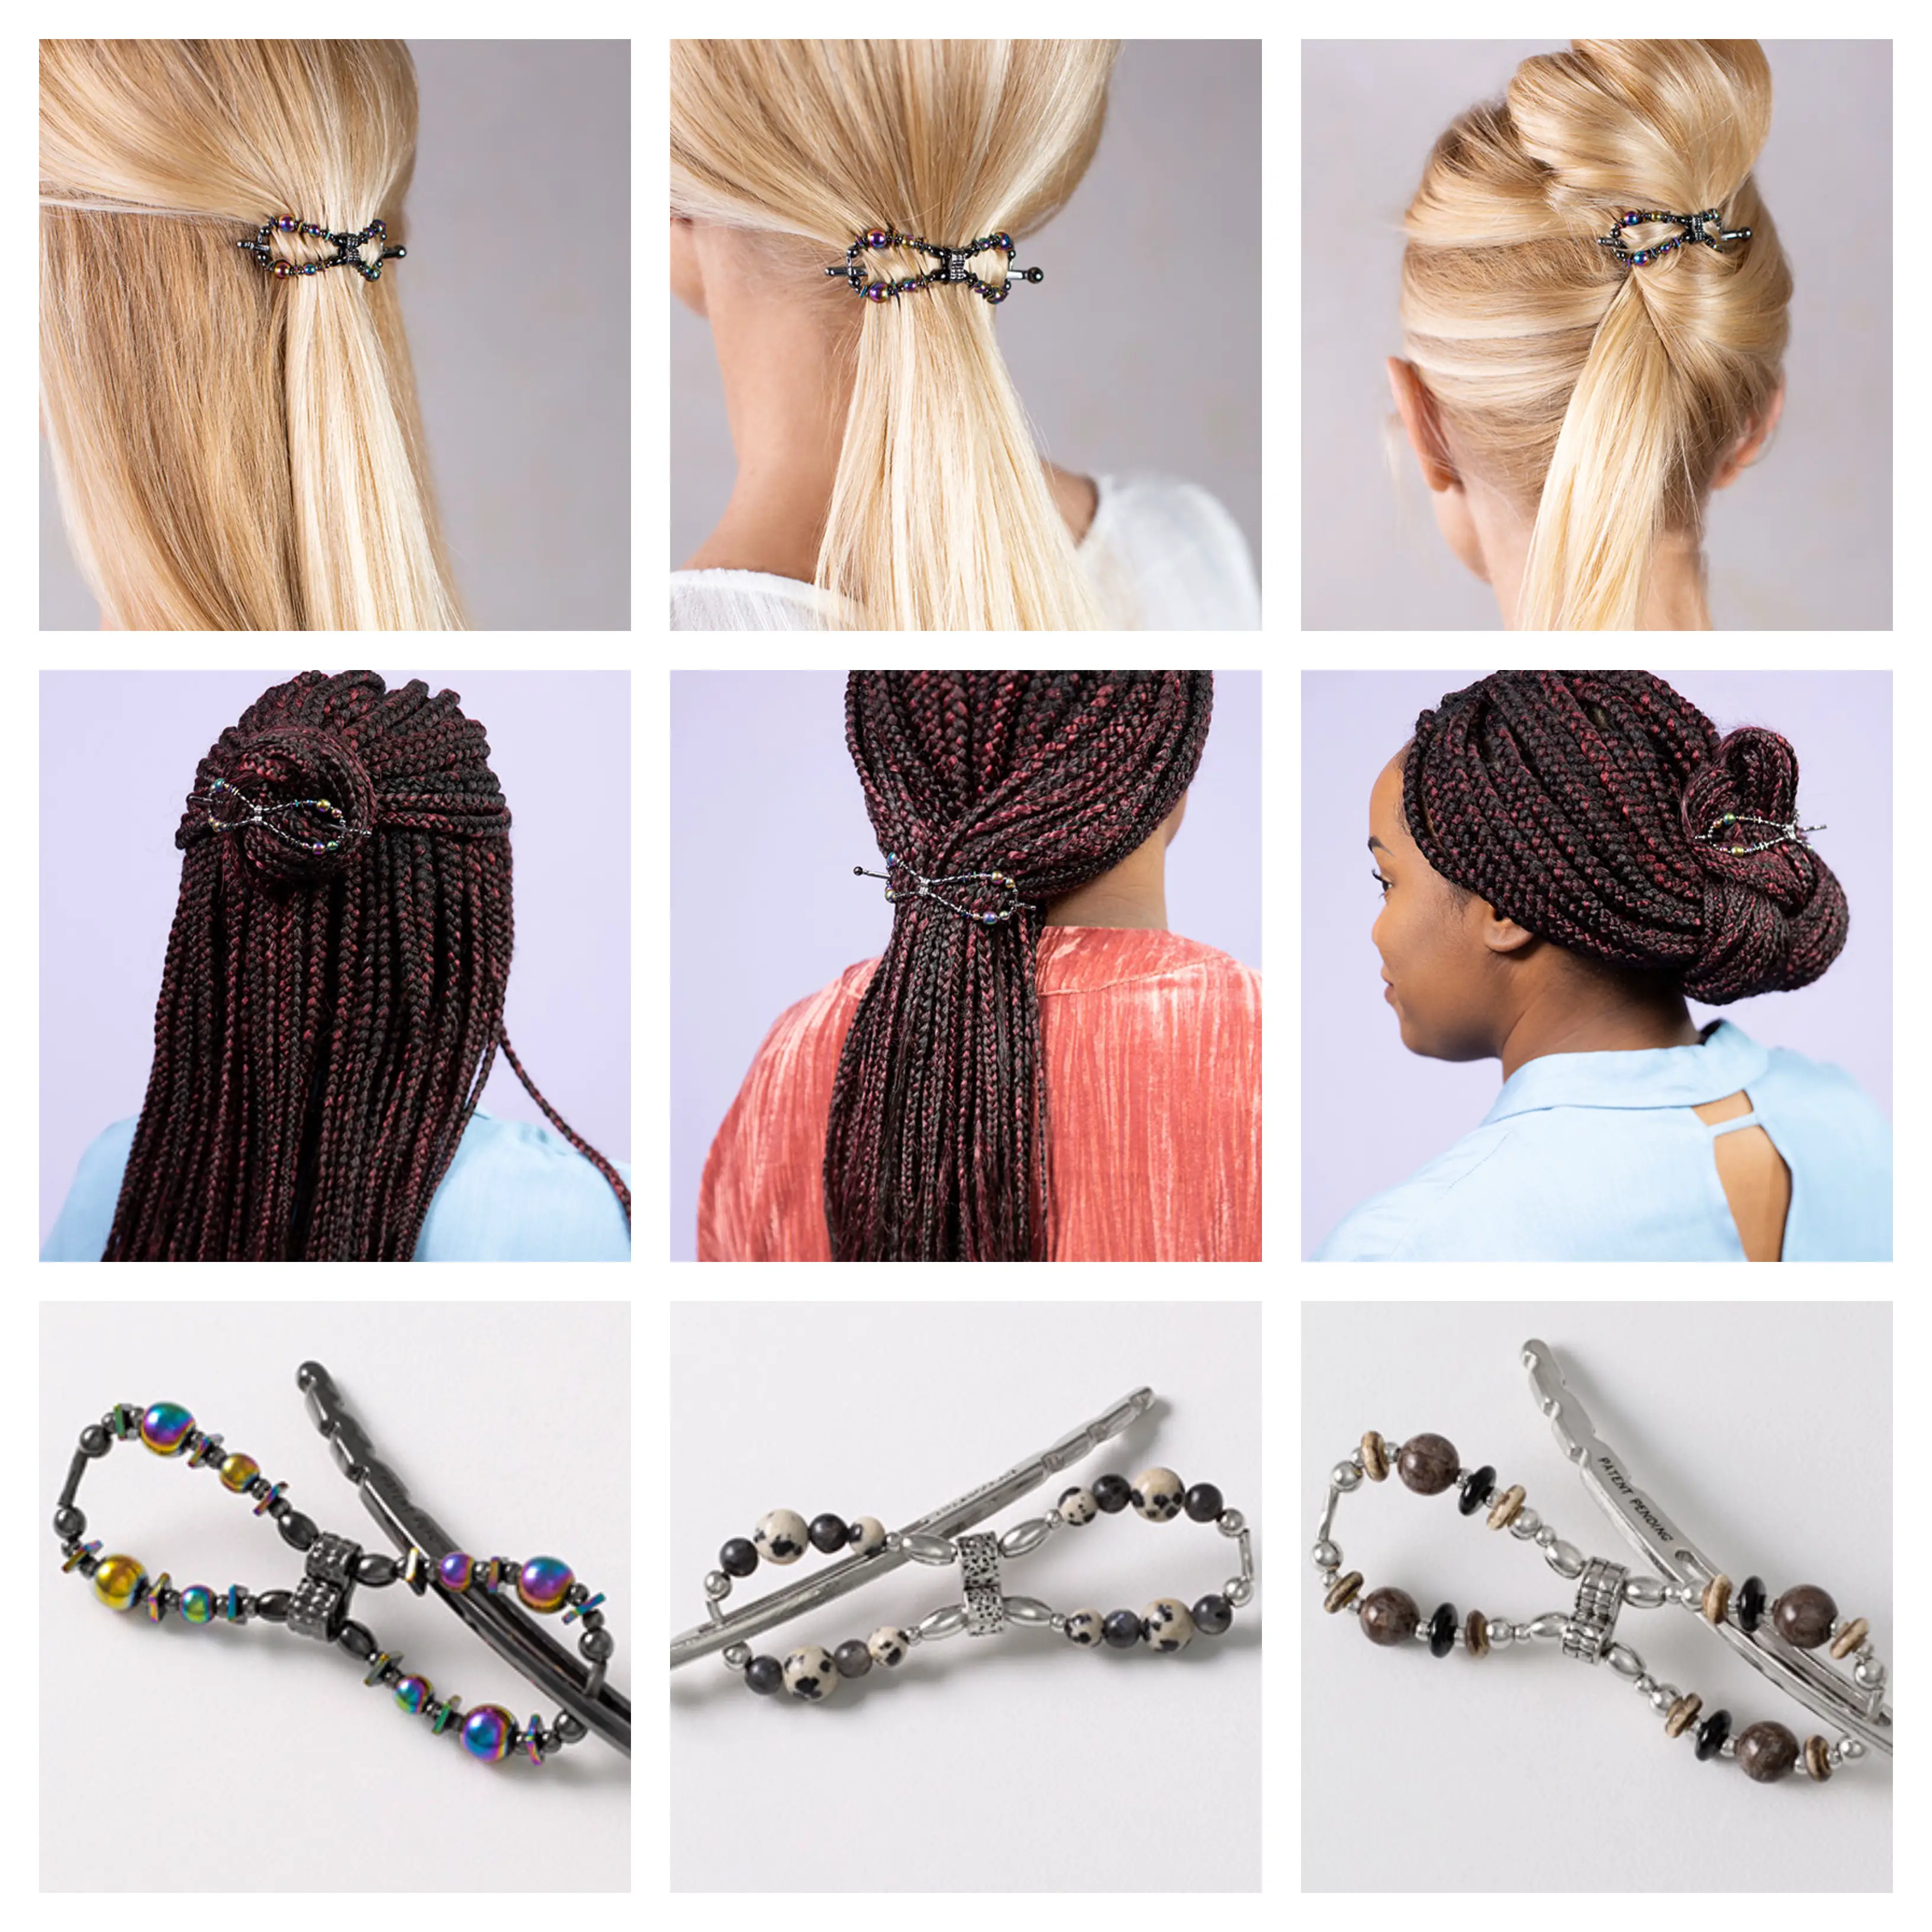 Flexi flip hairstyles collage